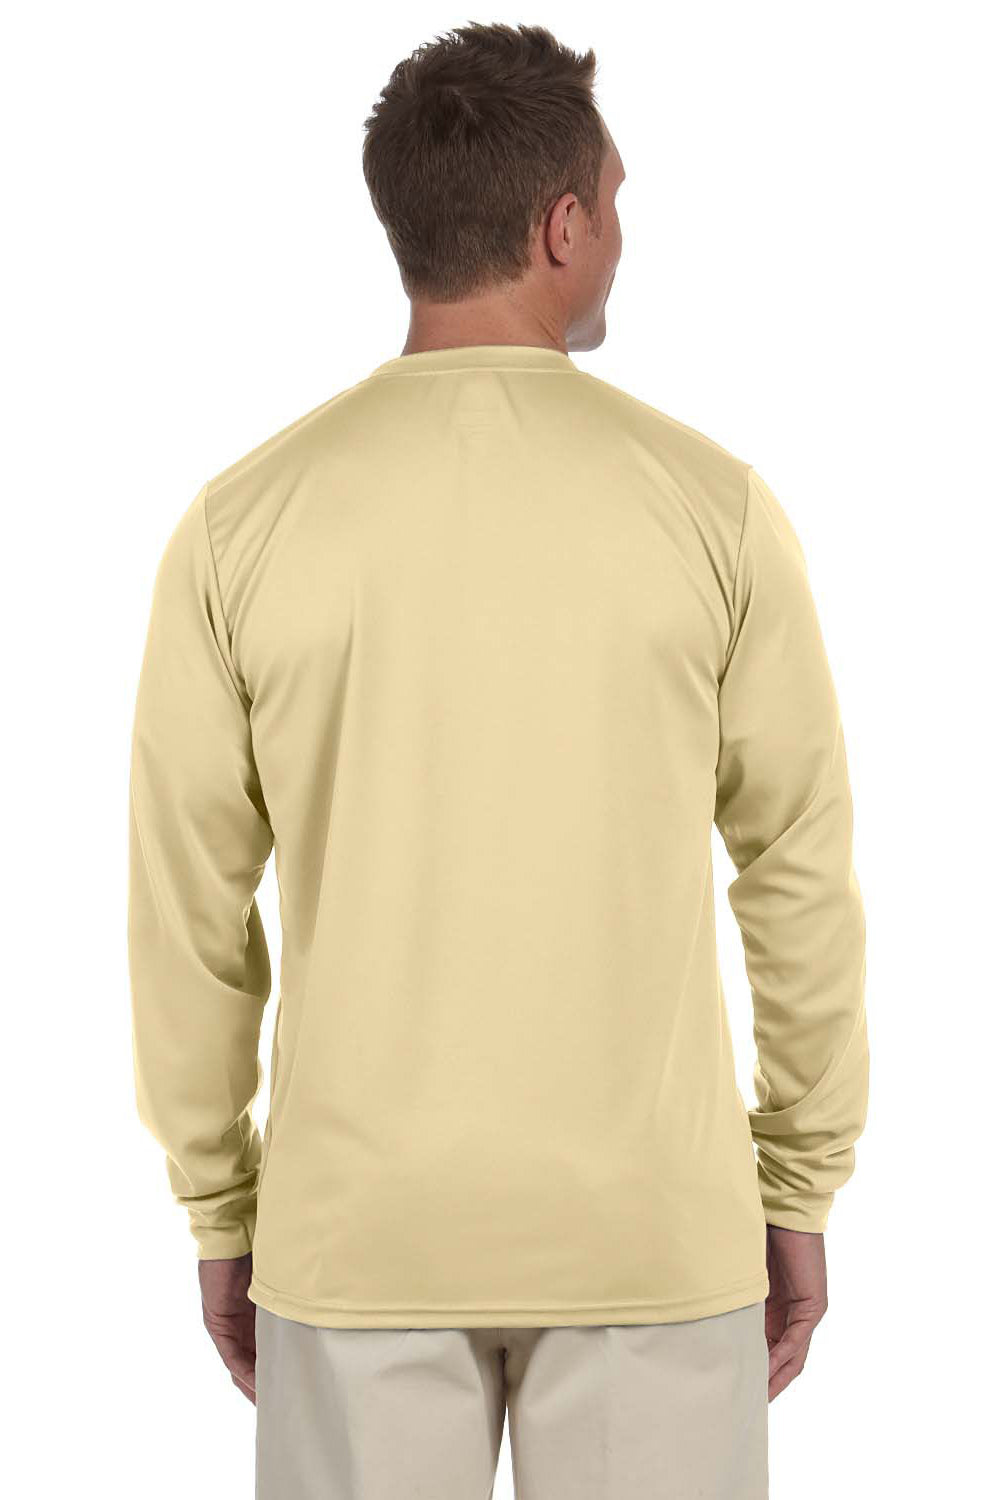 Augusta Sportswear 788 Mens Moisture Wicking Long Sleeve Crewneck T-Shirt Vegas Gold Model Back